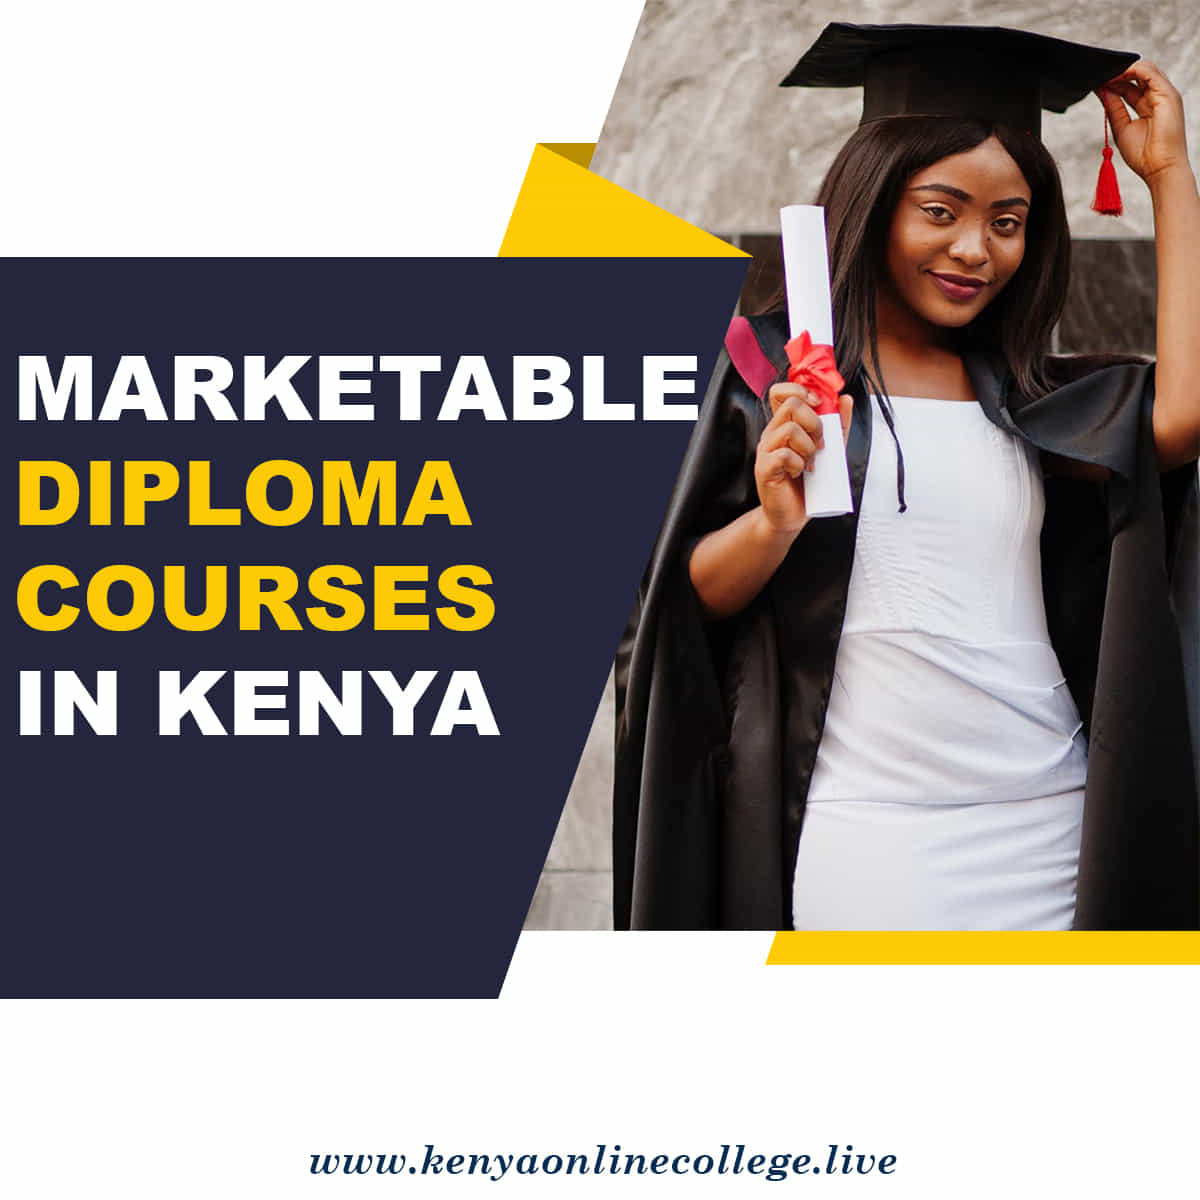 Marketable diploma courses in Kenya